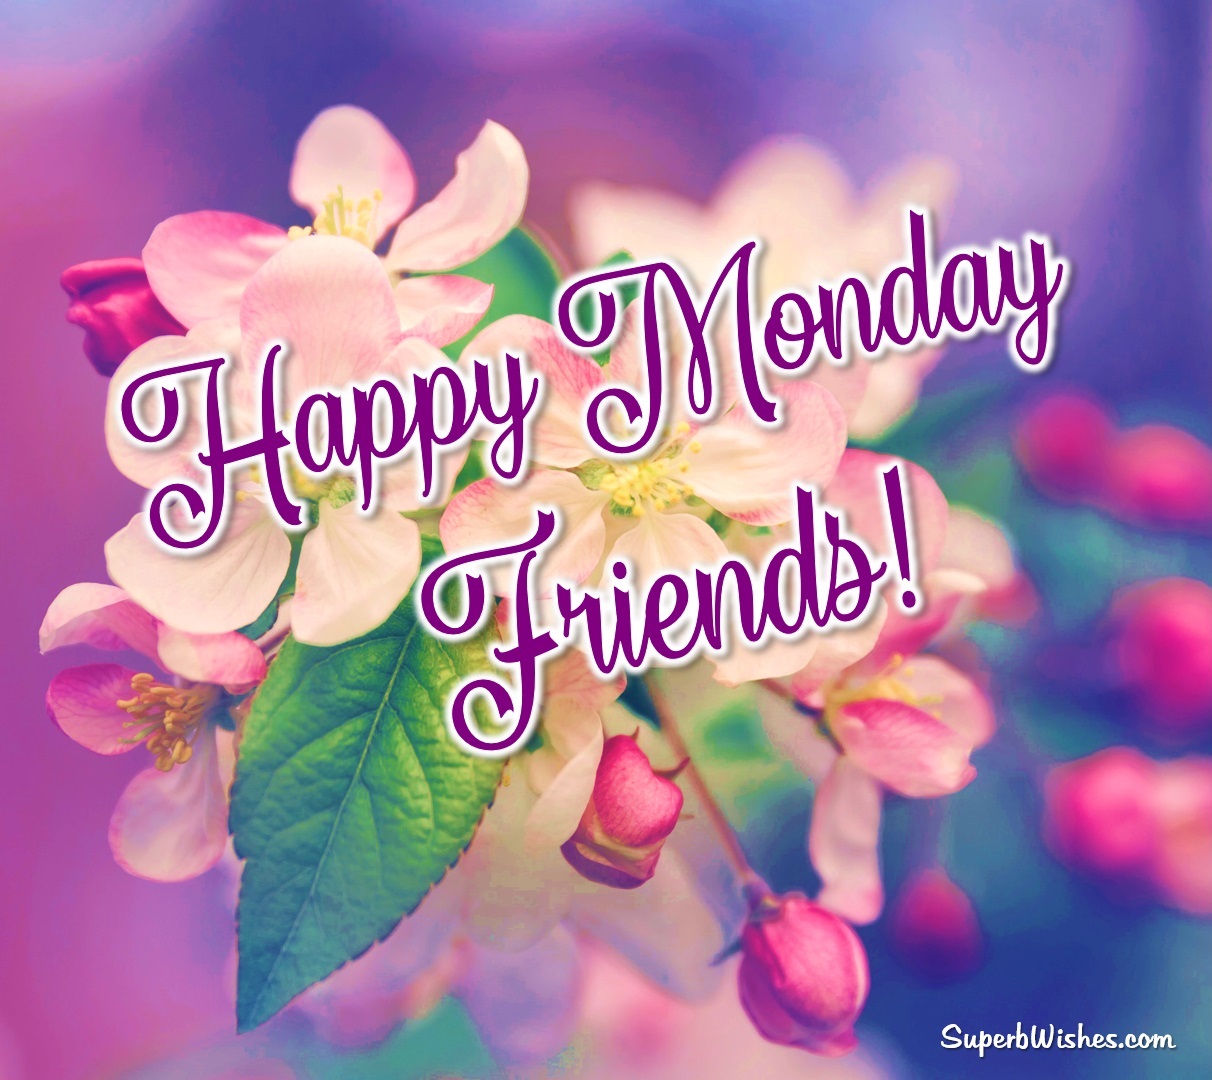 Happy Monday friends. Superbwishes.com